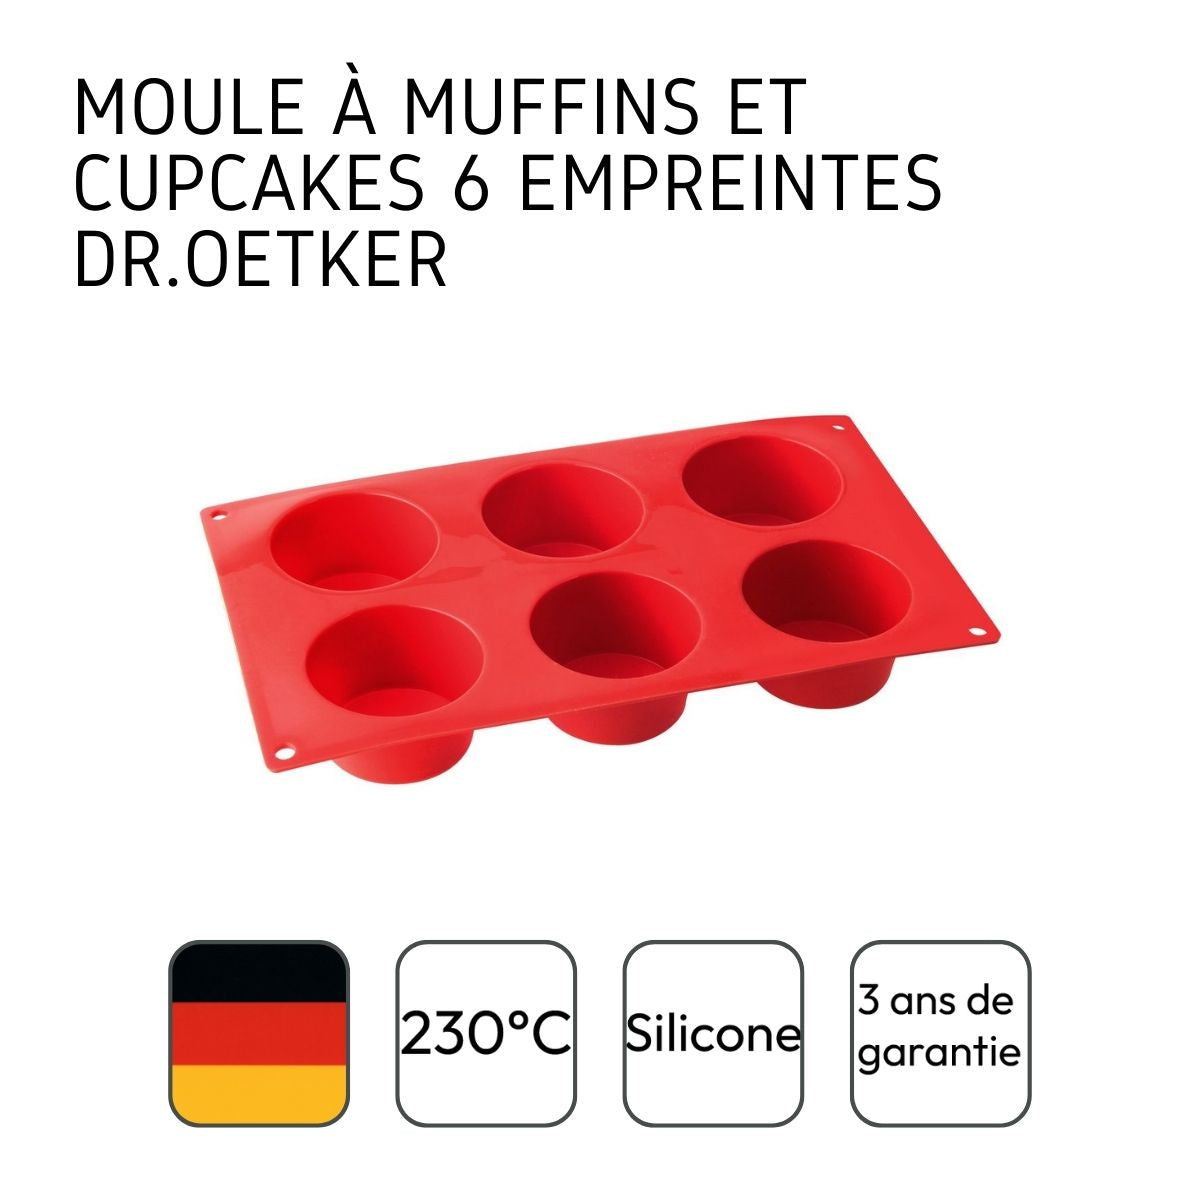 Moule à muffins 6 empreintes Dr.Oetker Silicone